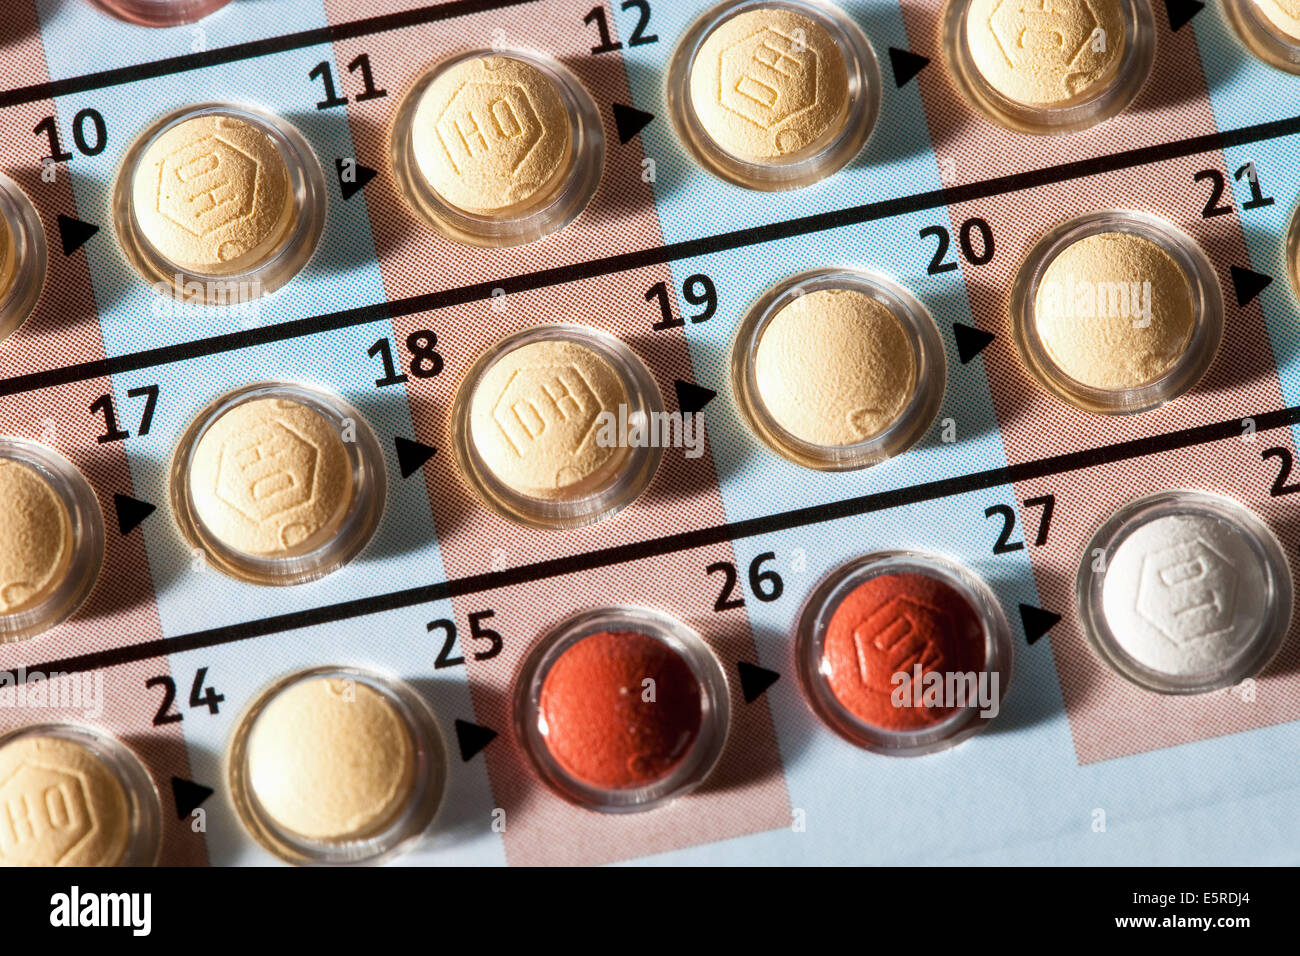 Pilule contraceptive Qlaira contenant des oestrogenes naturels Contraceptive pill Qlaira containing natural estrogens. Stock Photo